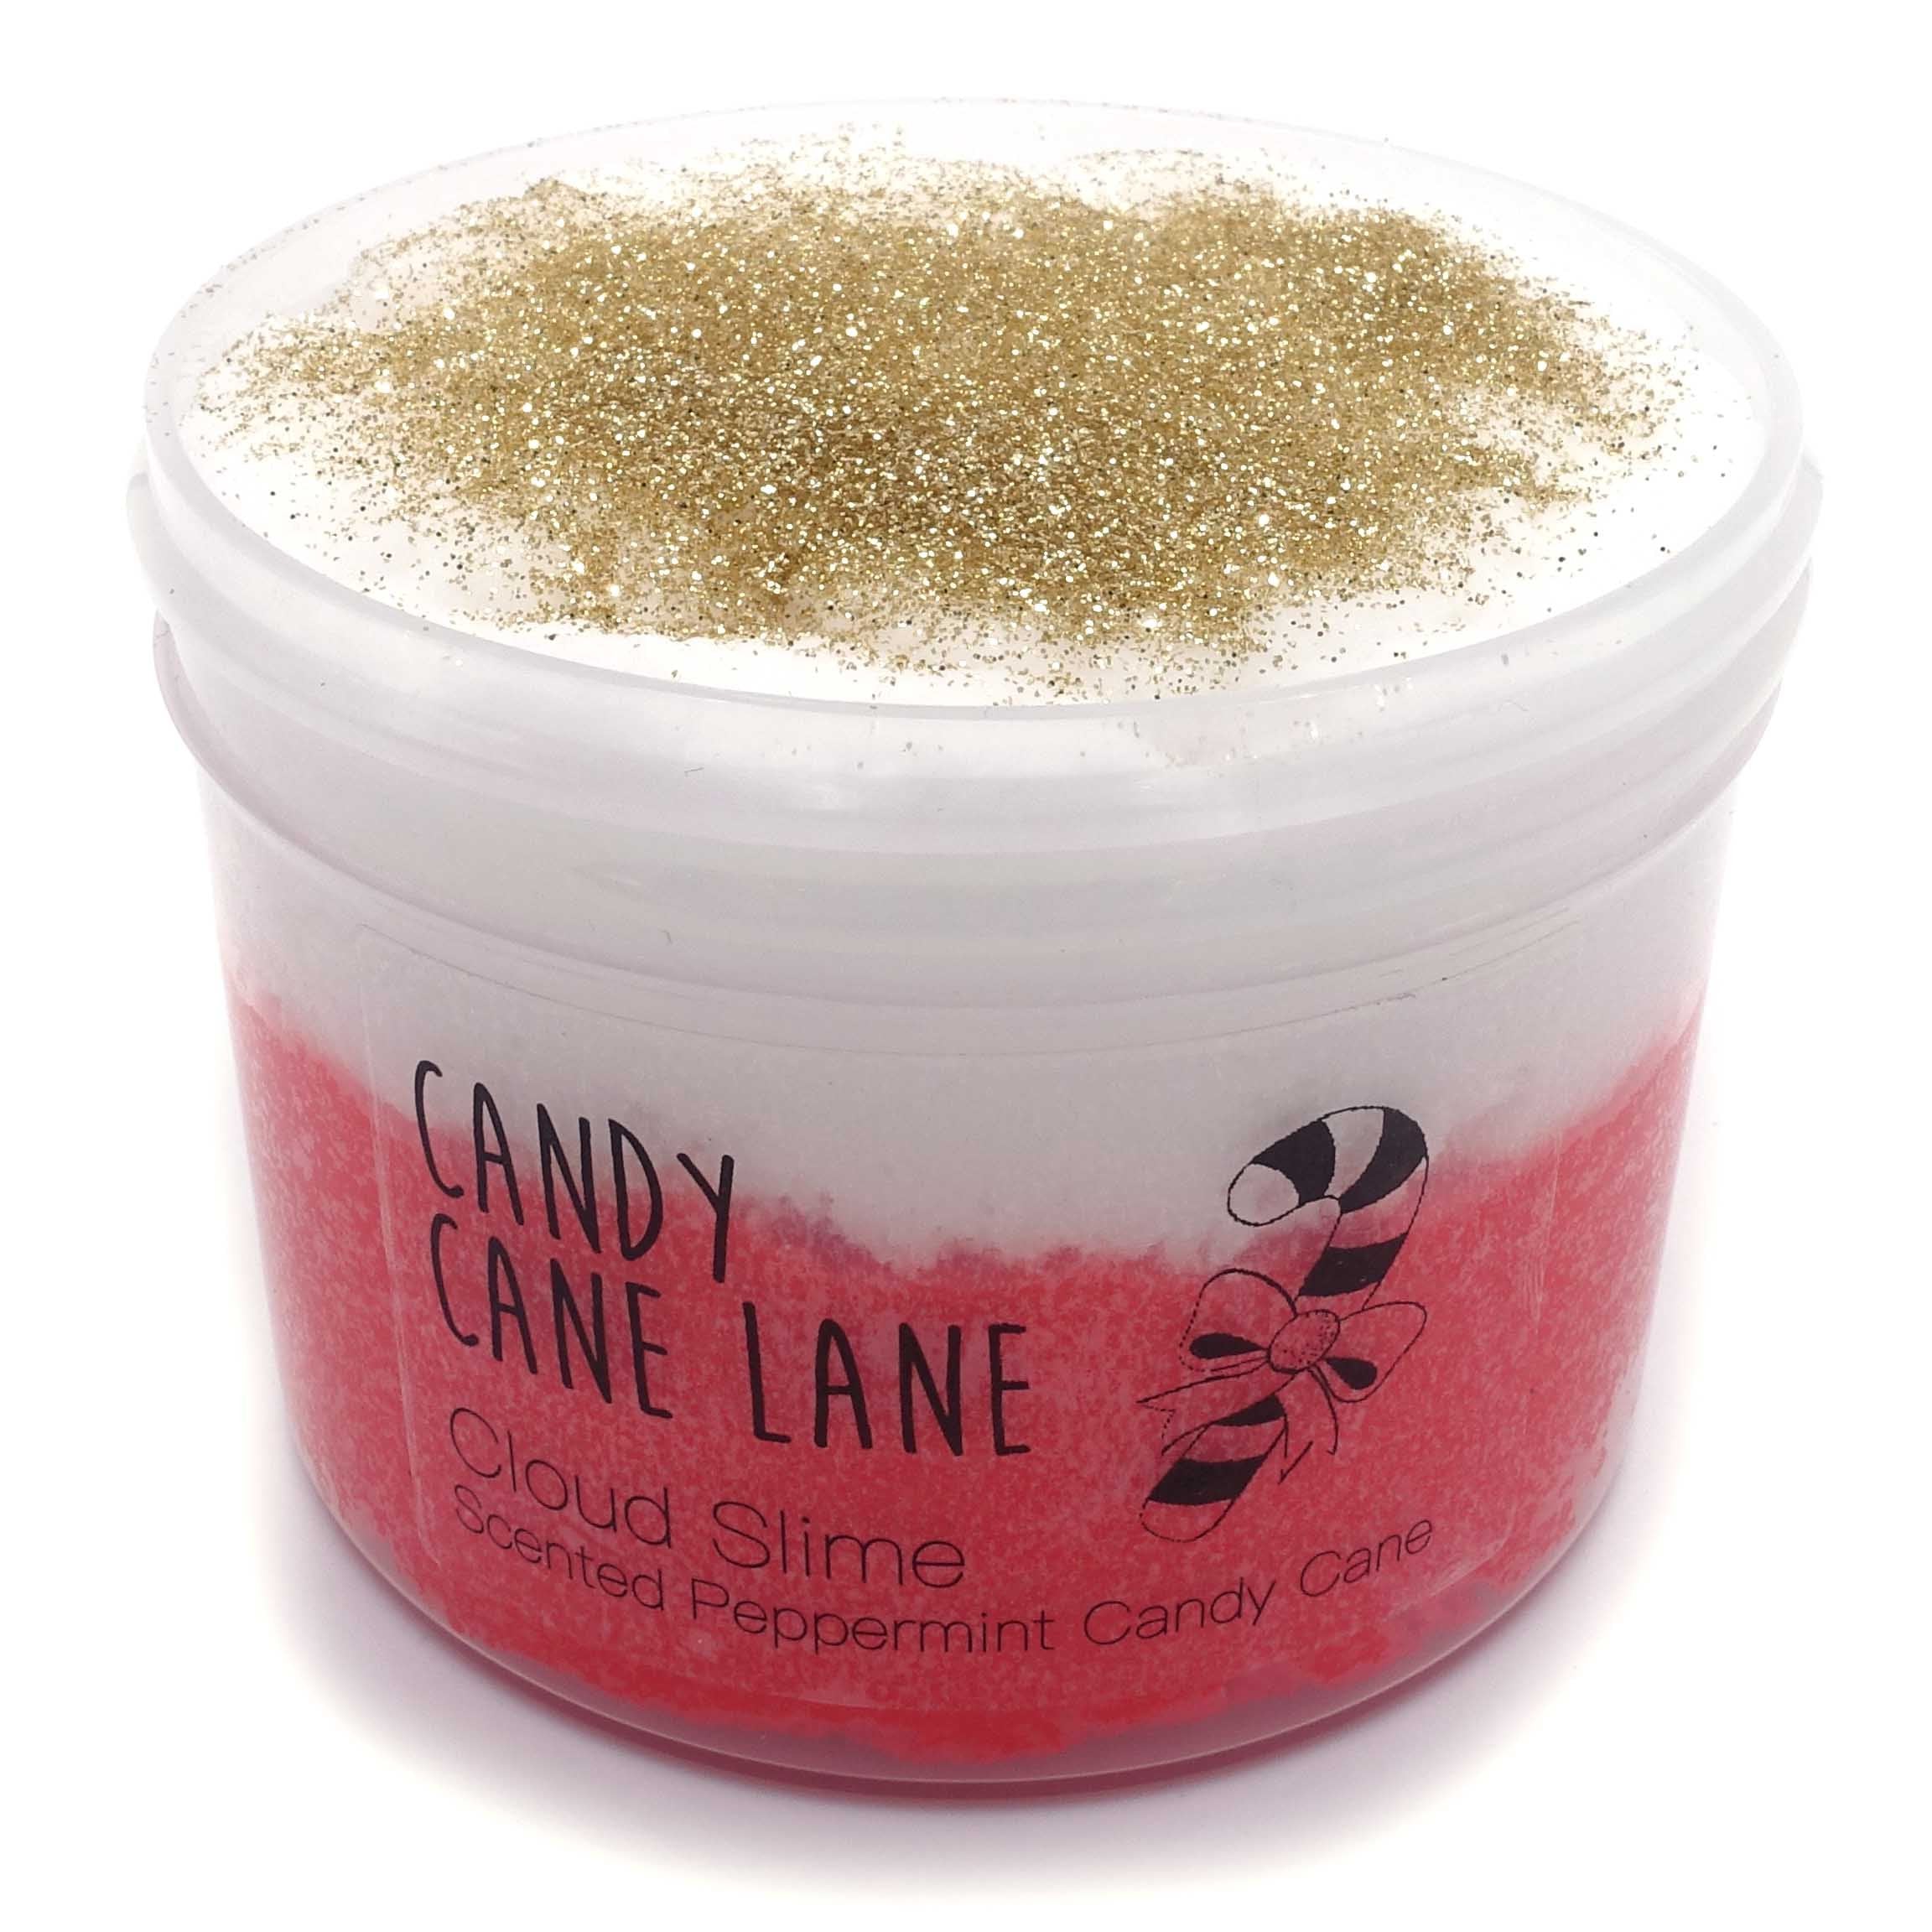 Candy Cane Lane Cloud Slime